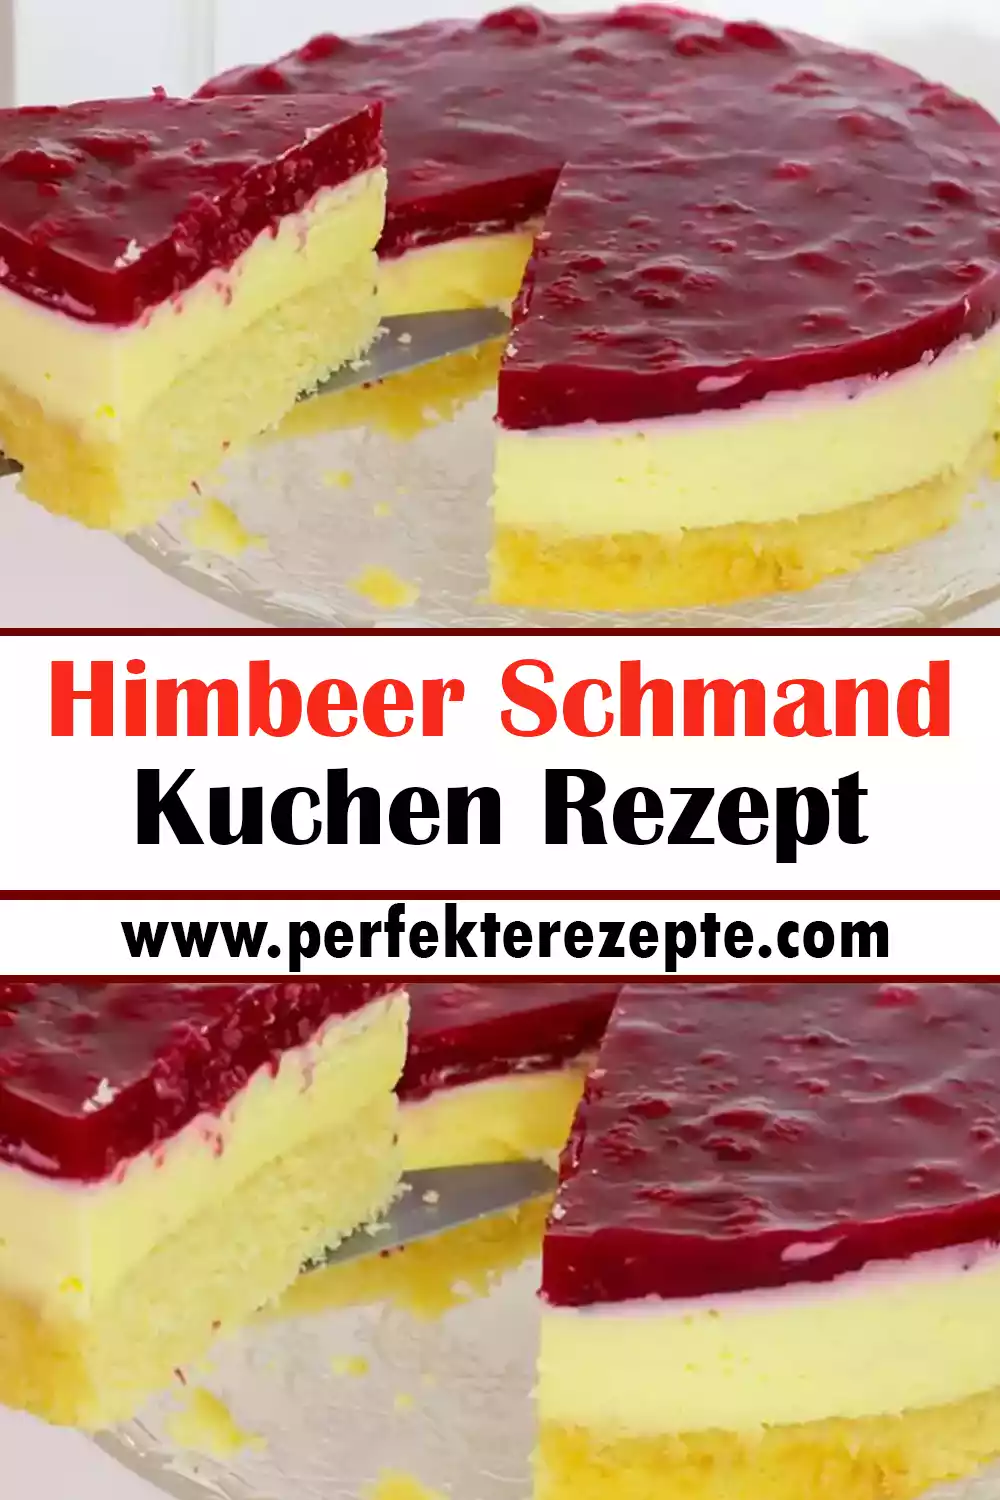 Himbeer Schmand Kuchen Rezept